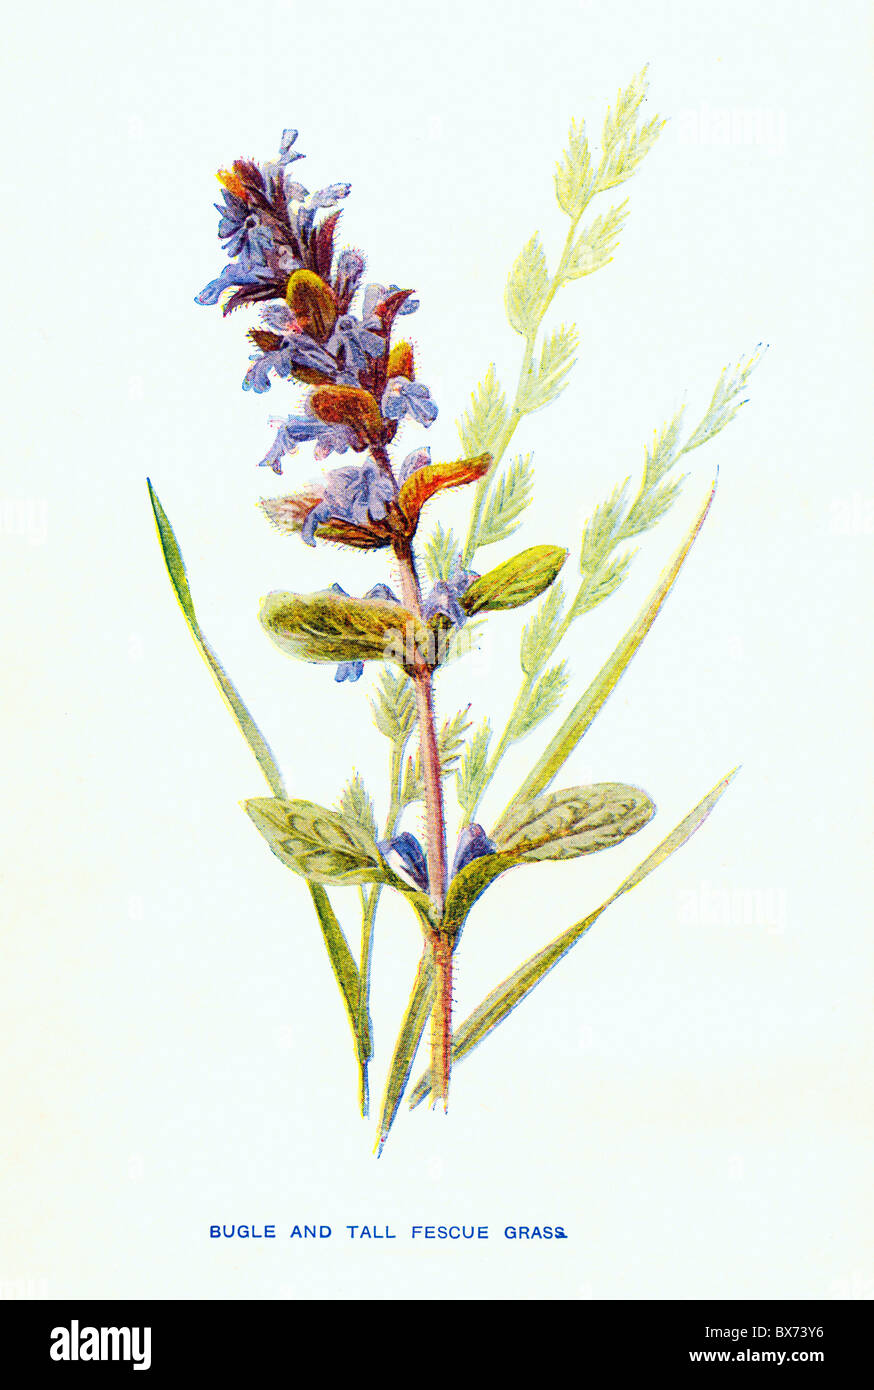 Bugle (Ajuga reptans) and Tall Fescue Grass (Festuca arundinacea), from Familiar Wild Flowers by F. Edward Hulme Stock Photo